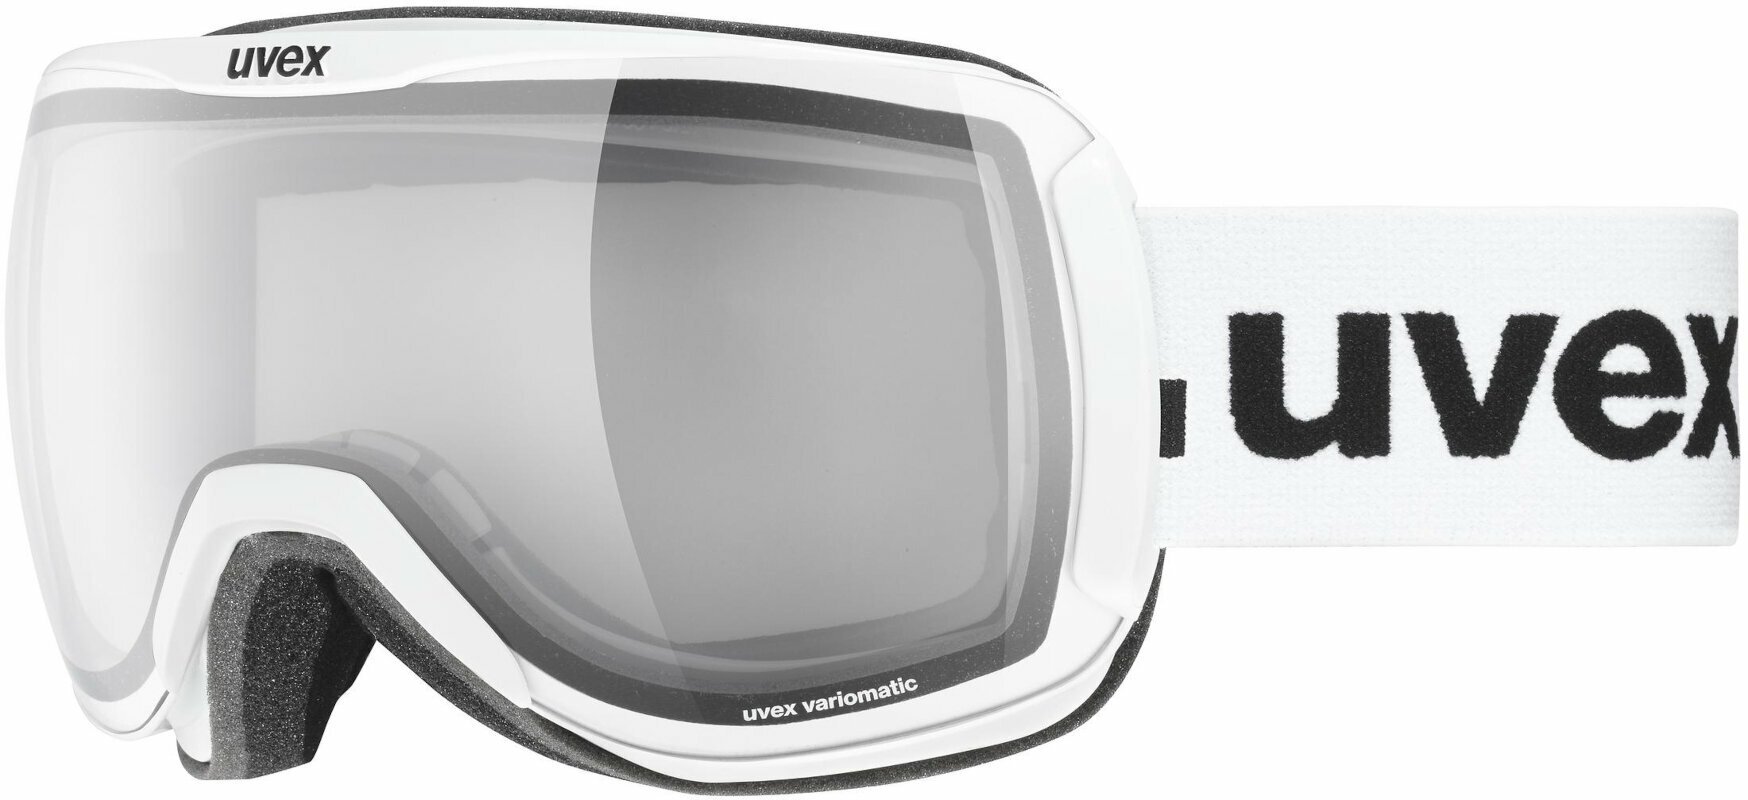 Skidglasögon UVEX Downhill 2100 VPX White/Variomatic Polavision Skidglasögon